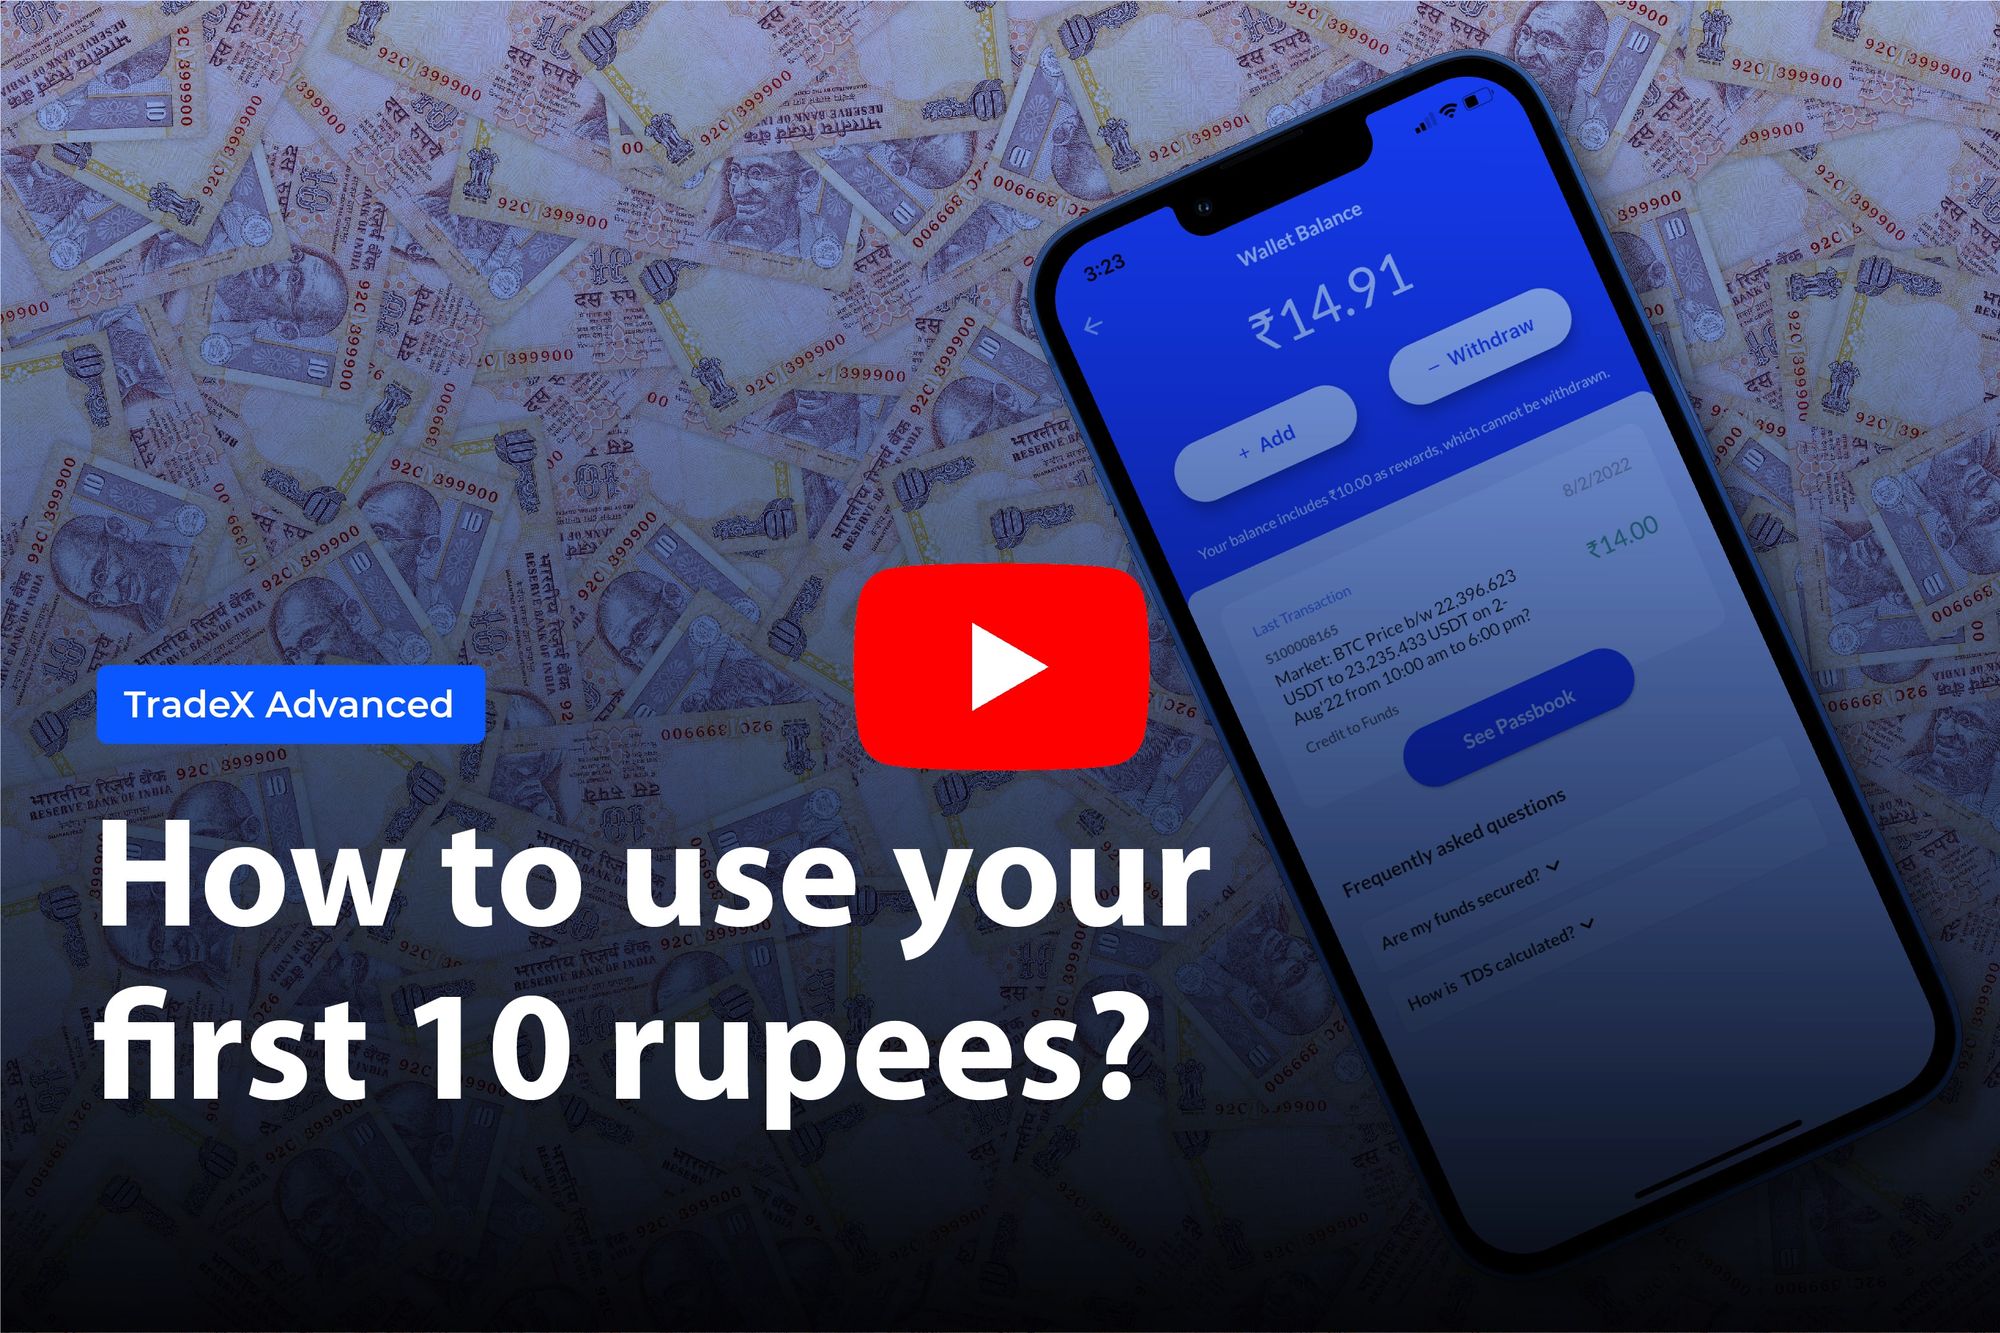 How to use ₹10 bonus